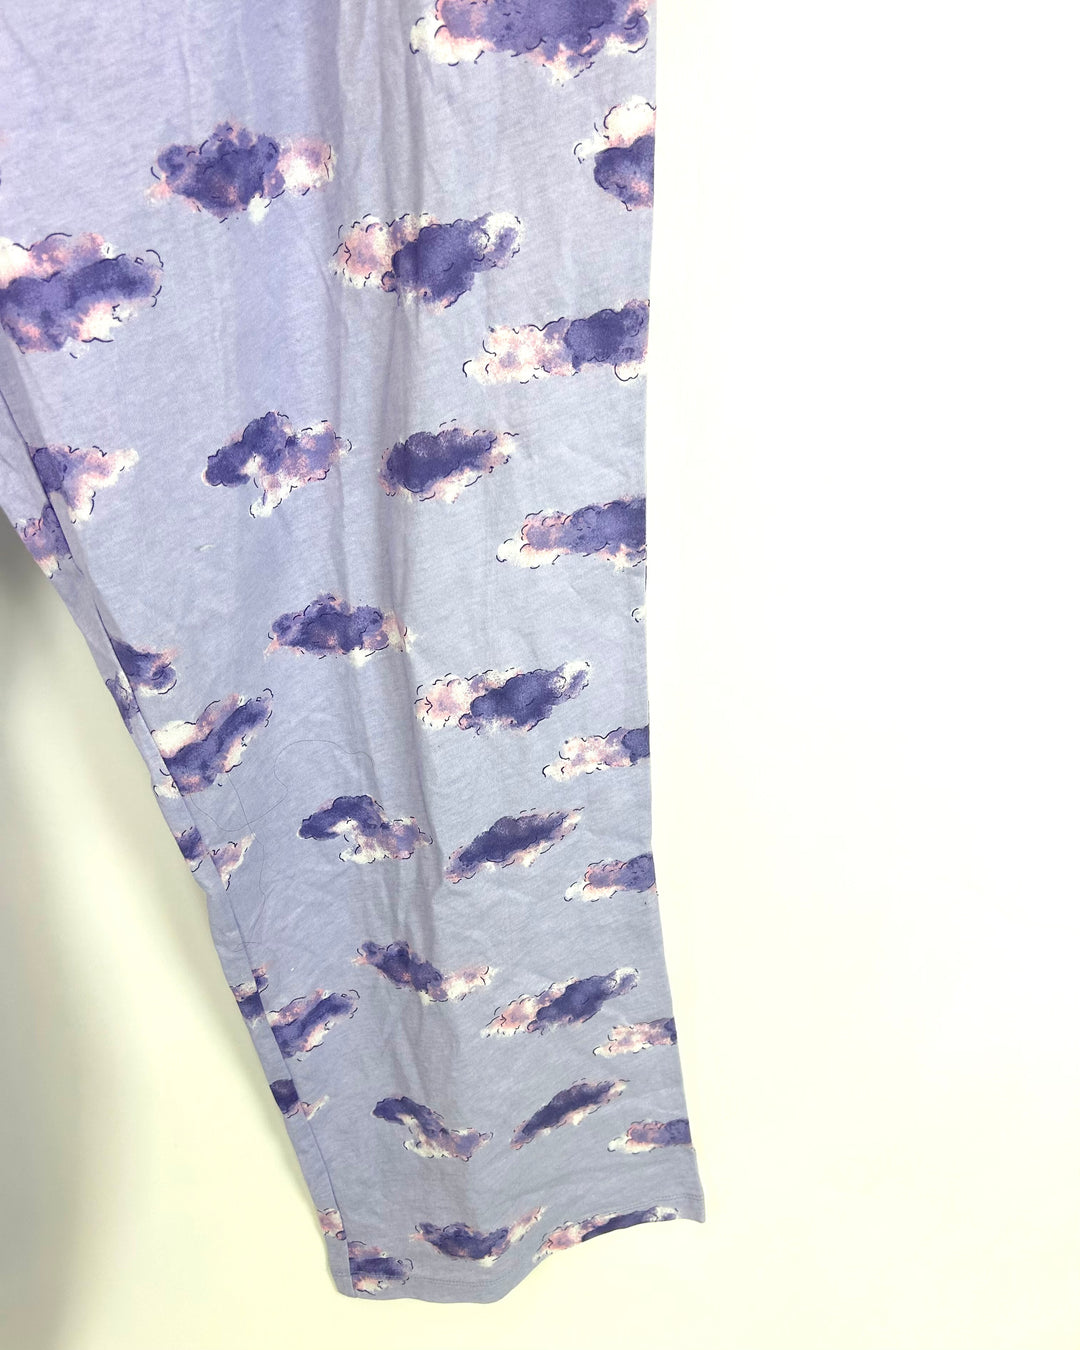 Purple Cloud Print Pajama Pants - 1X